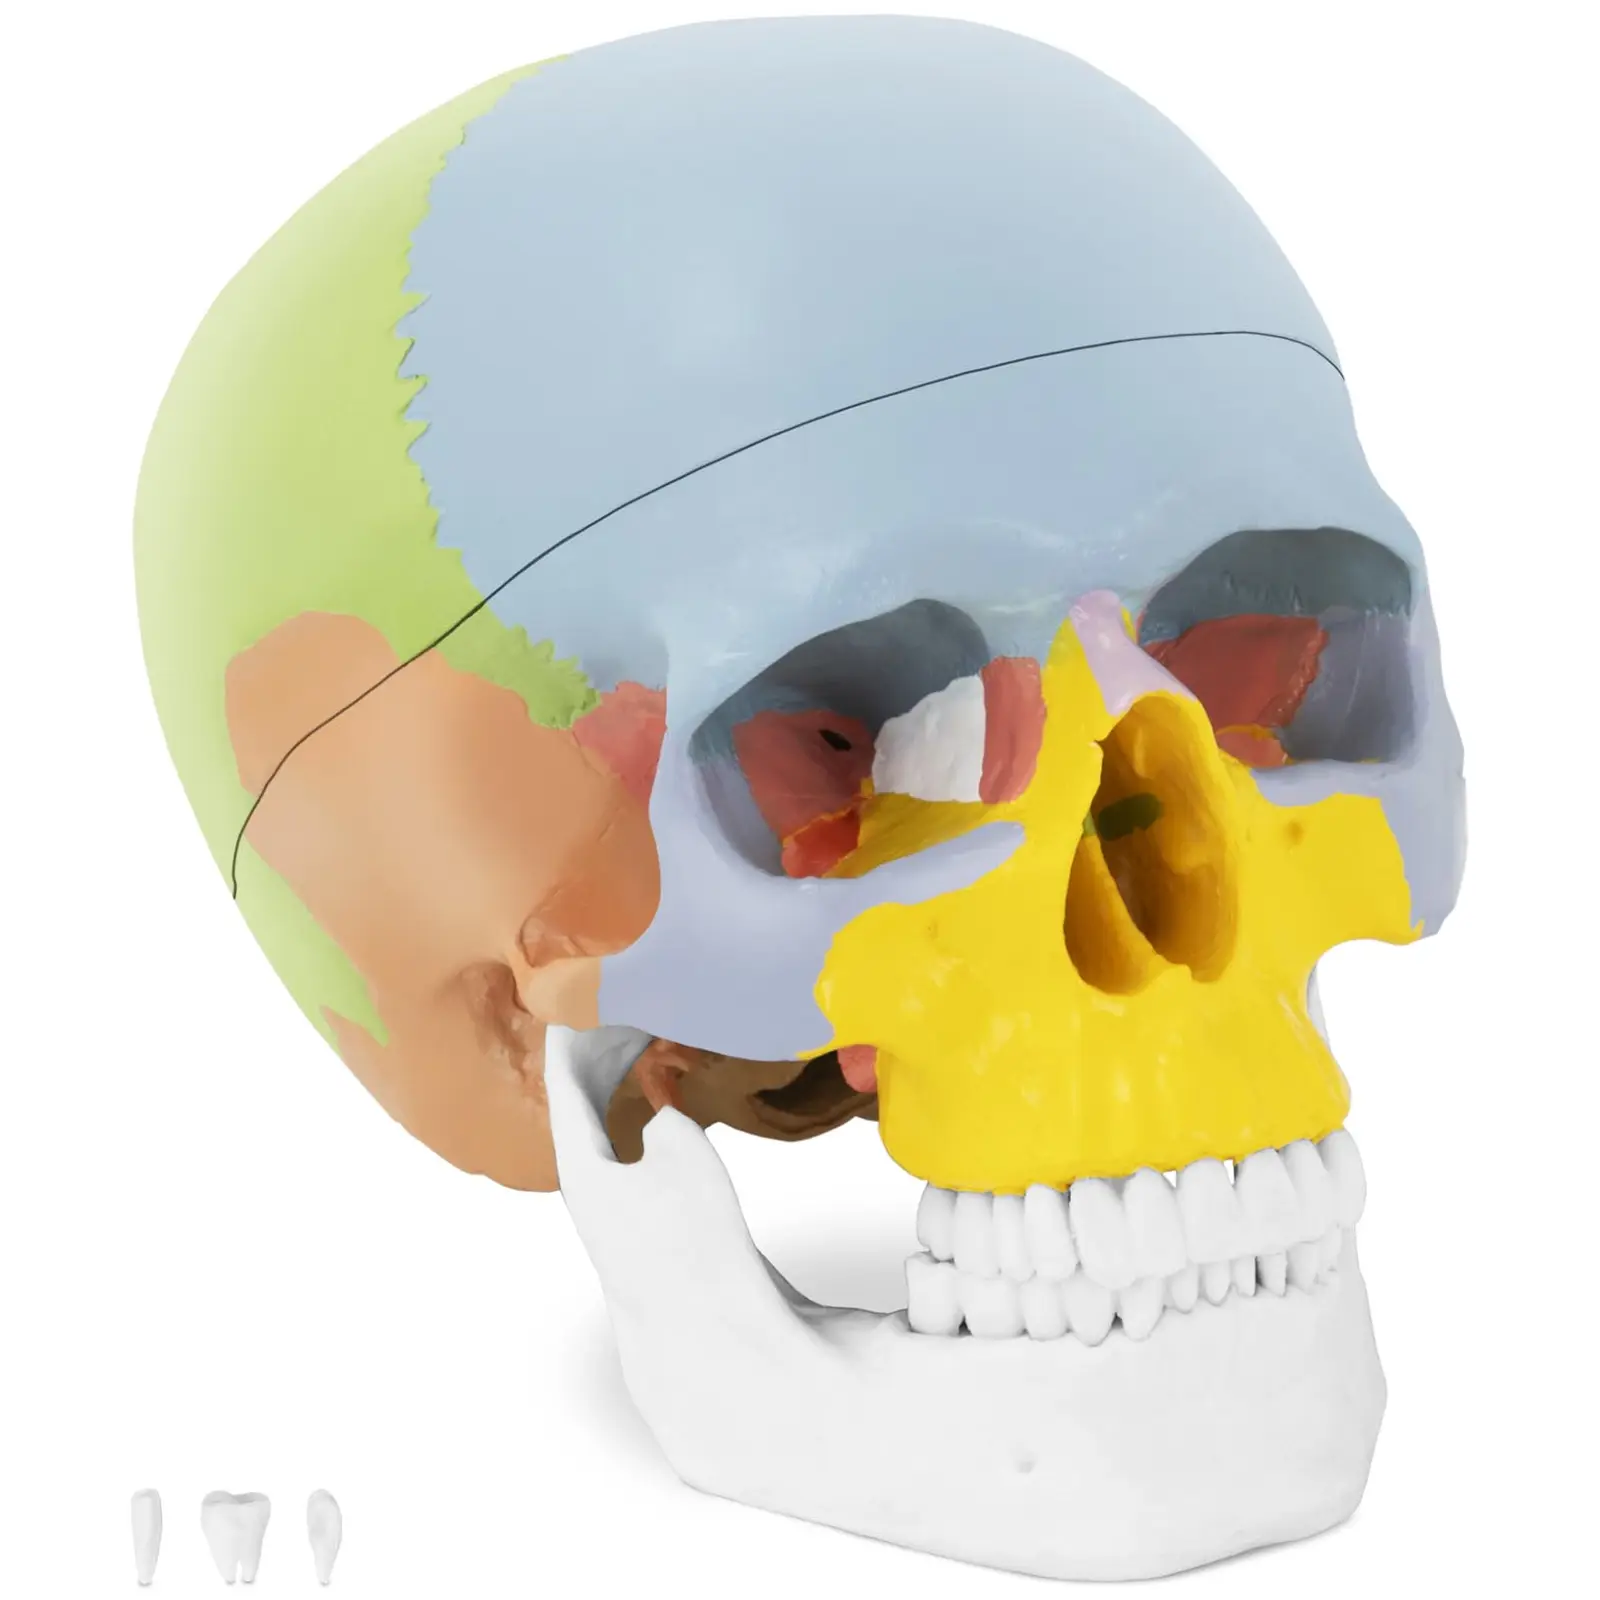 Kranium – Anatomisk modell – fargerik